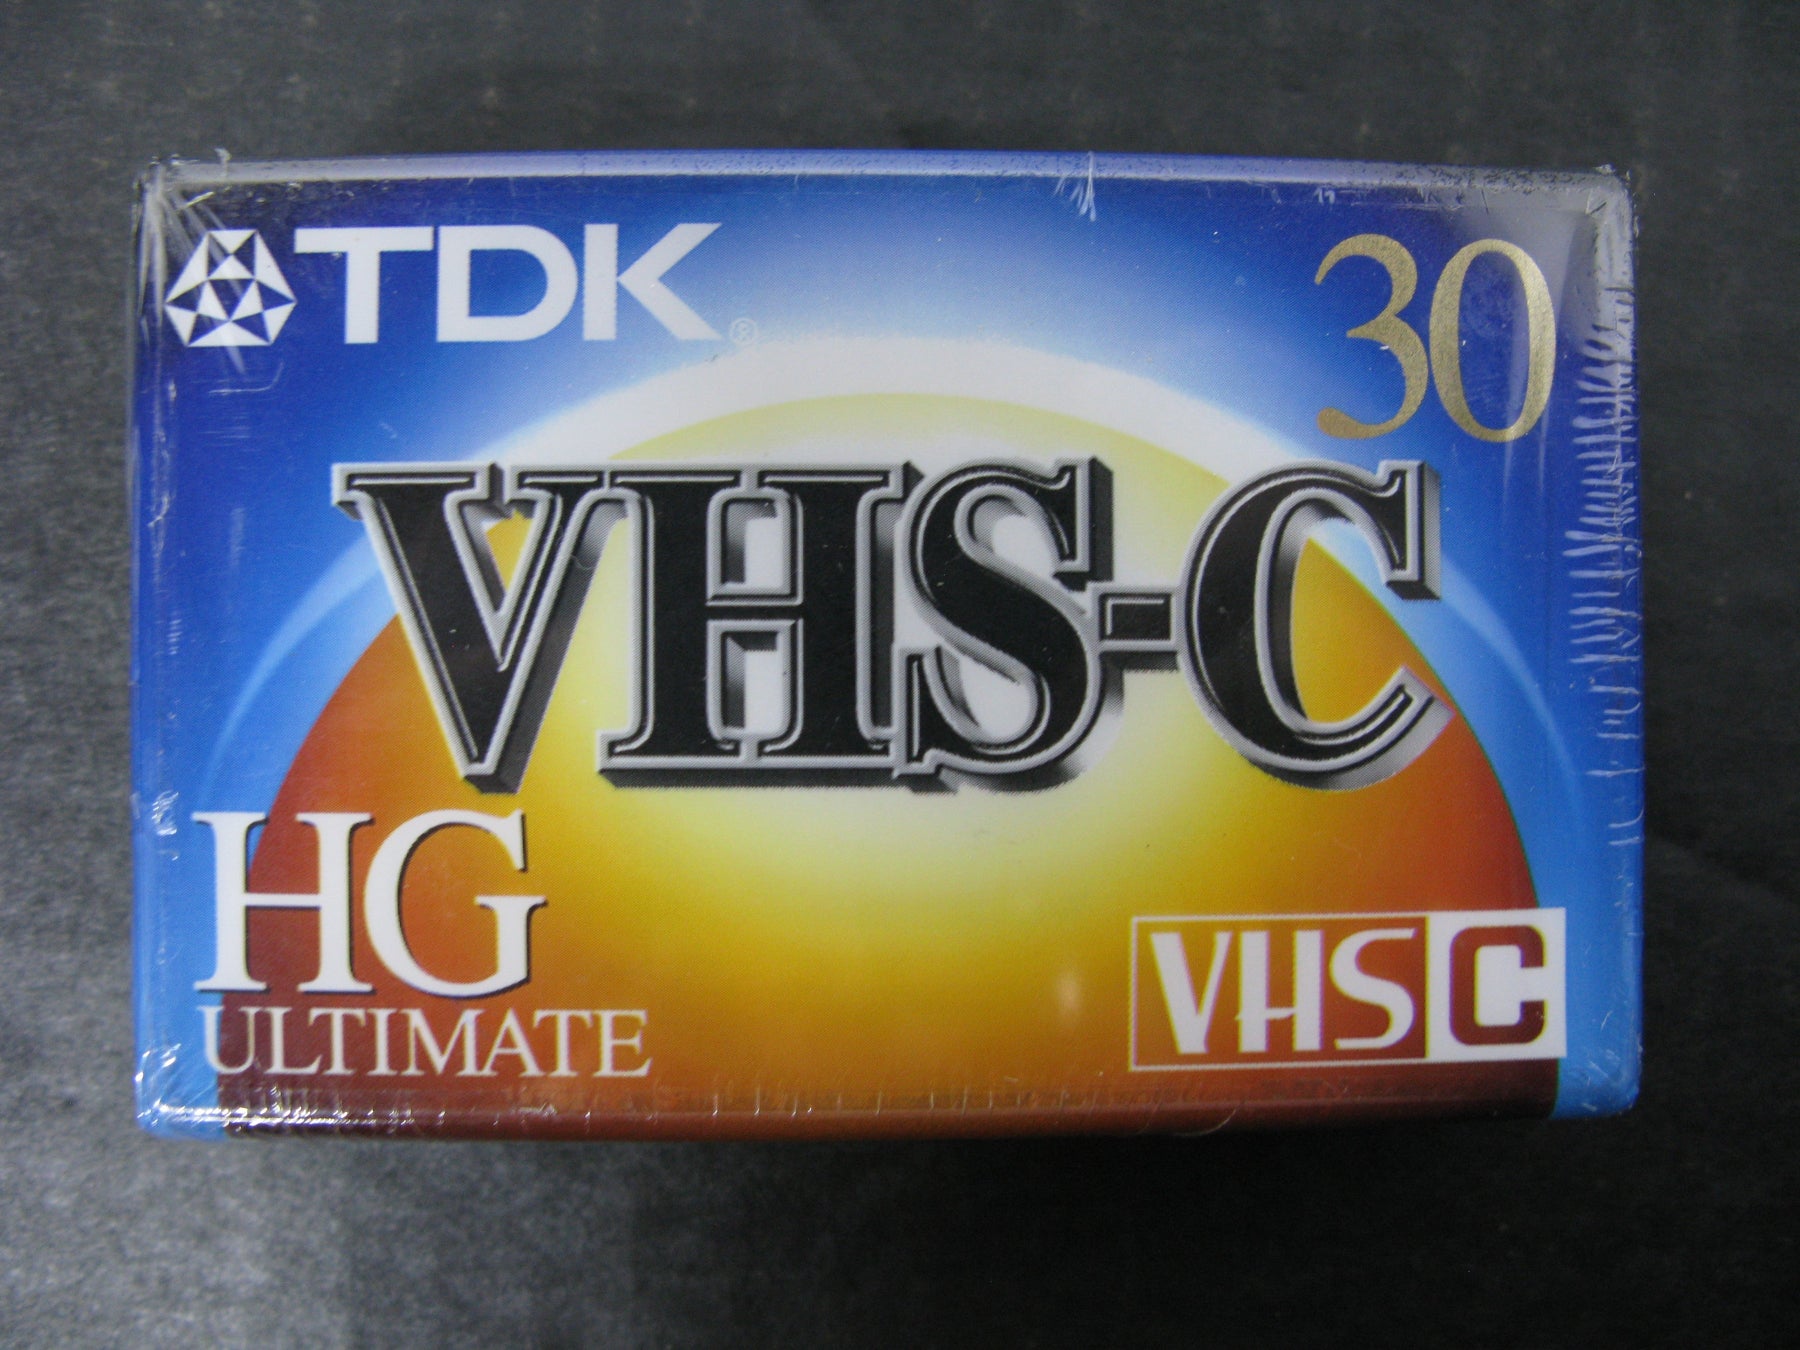 TDK VHS-C HG Ultimate TC-30